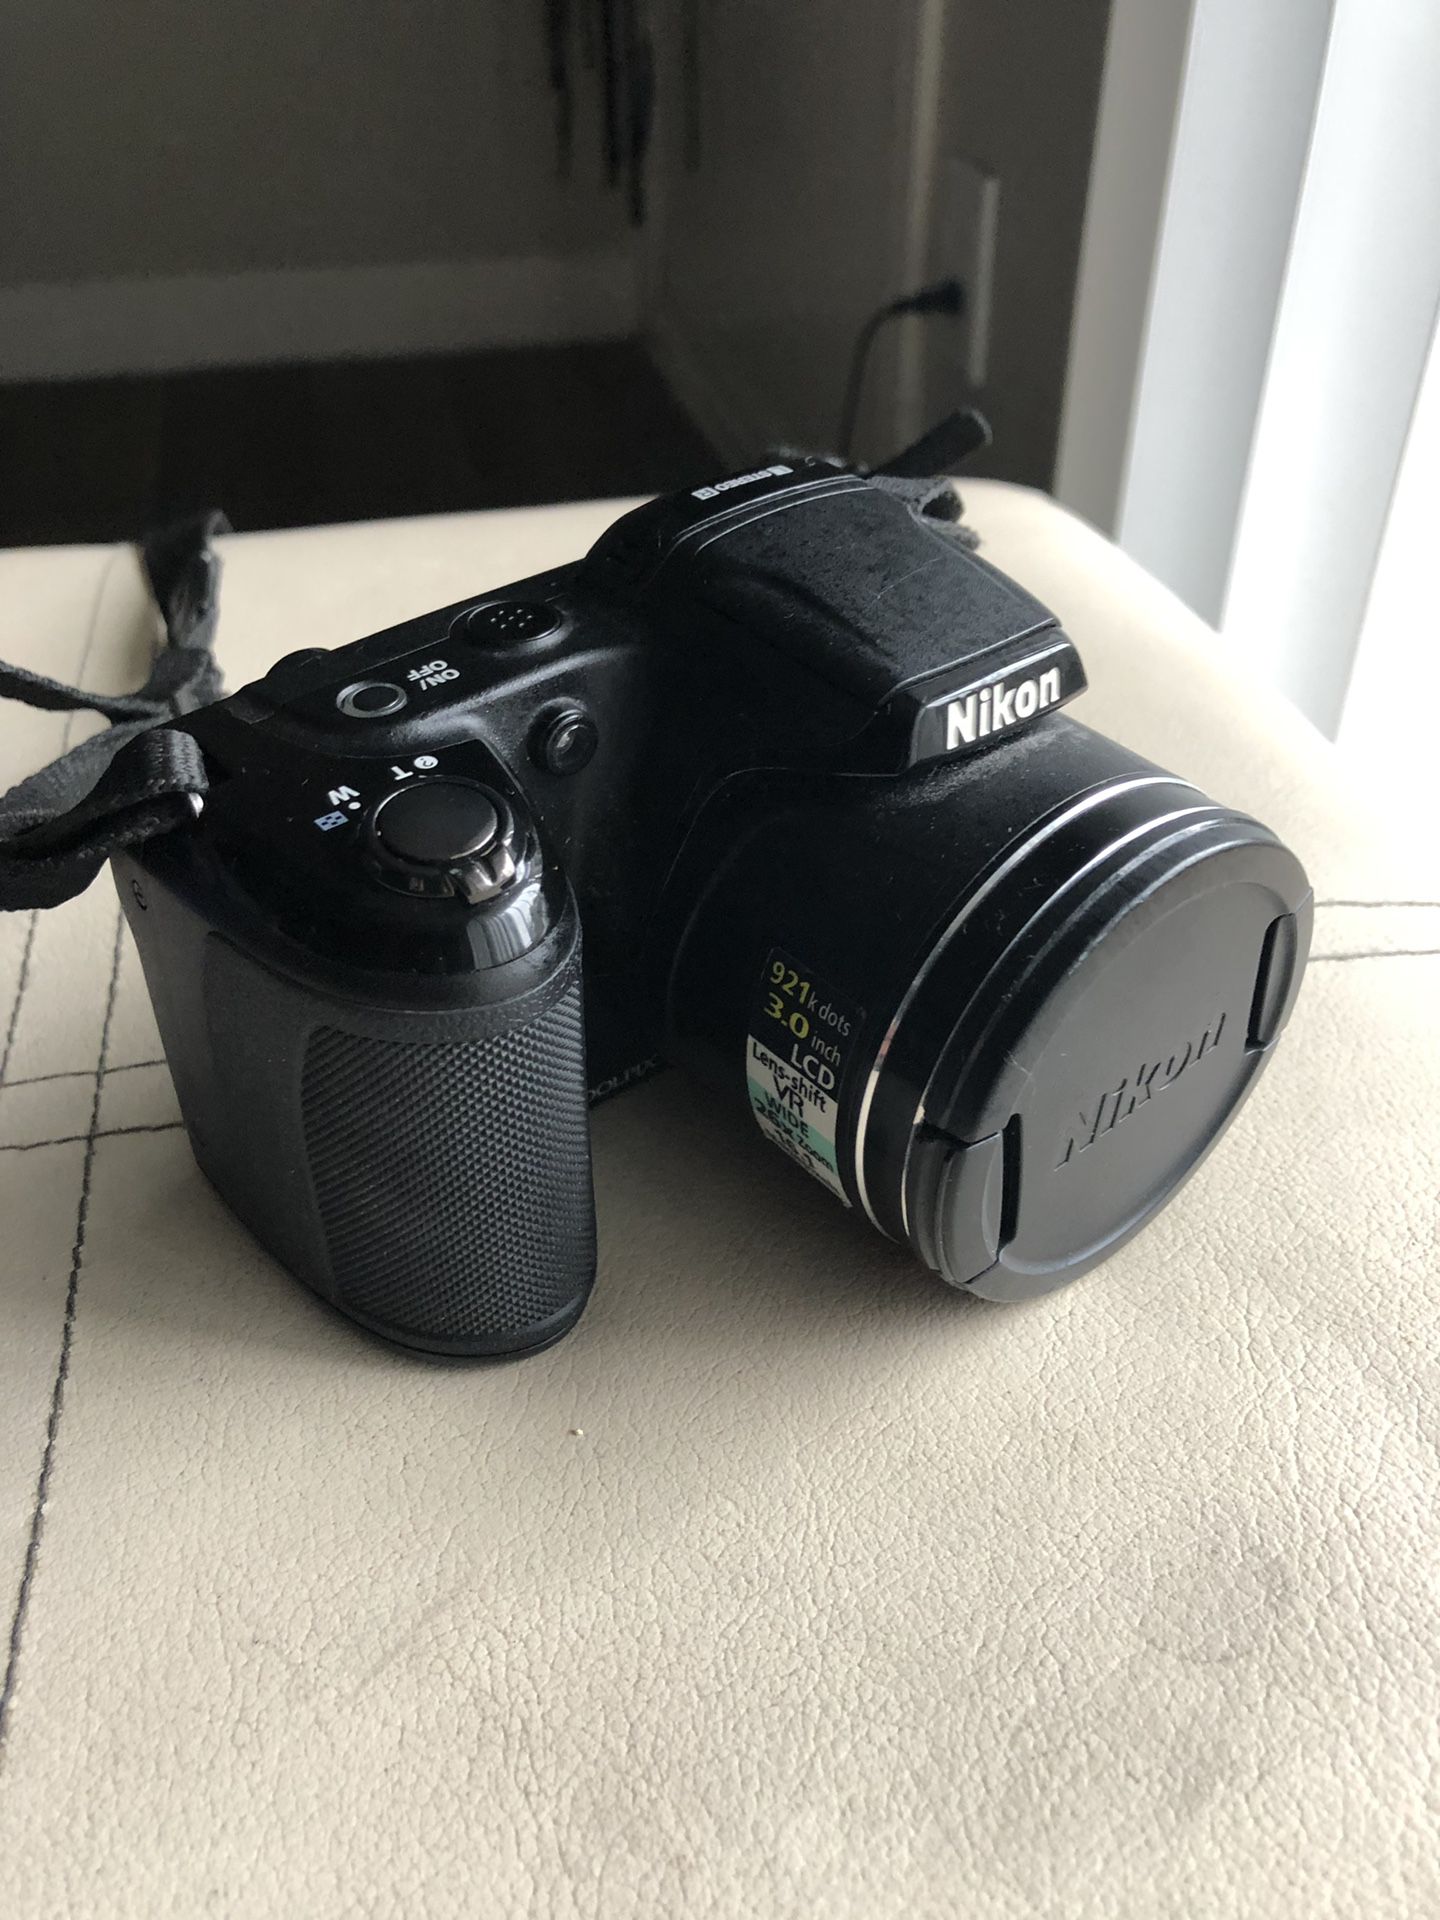 Nikon CoolPix L810 digital camera!! Only $20